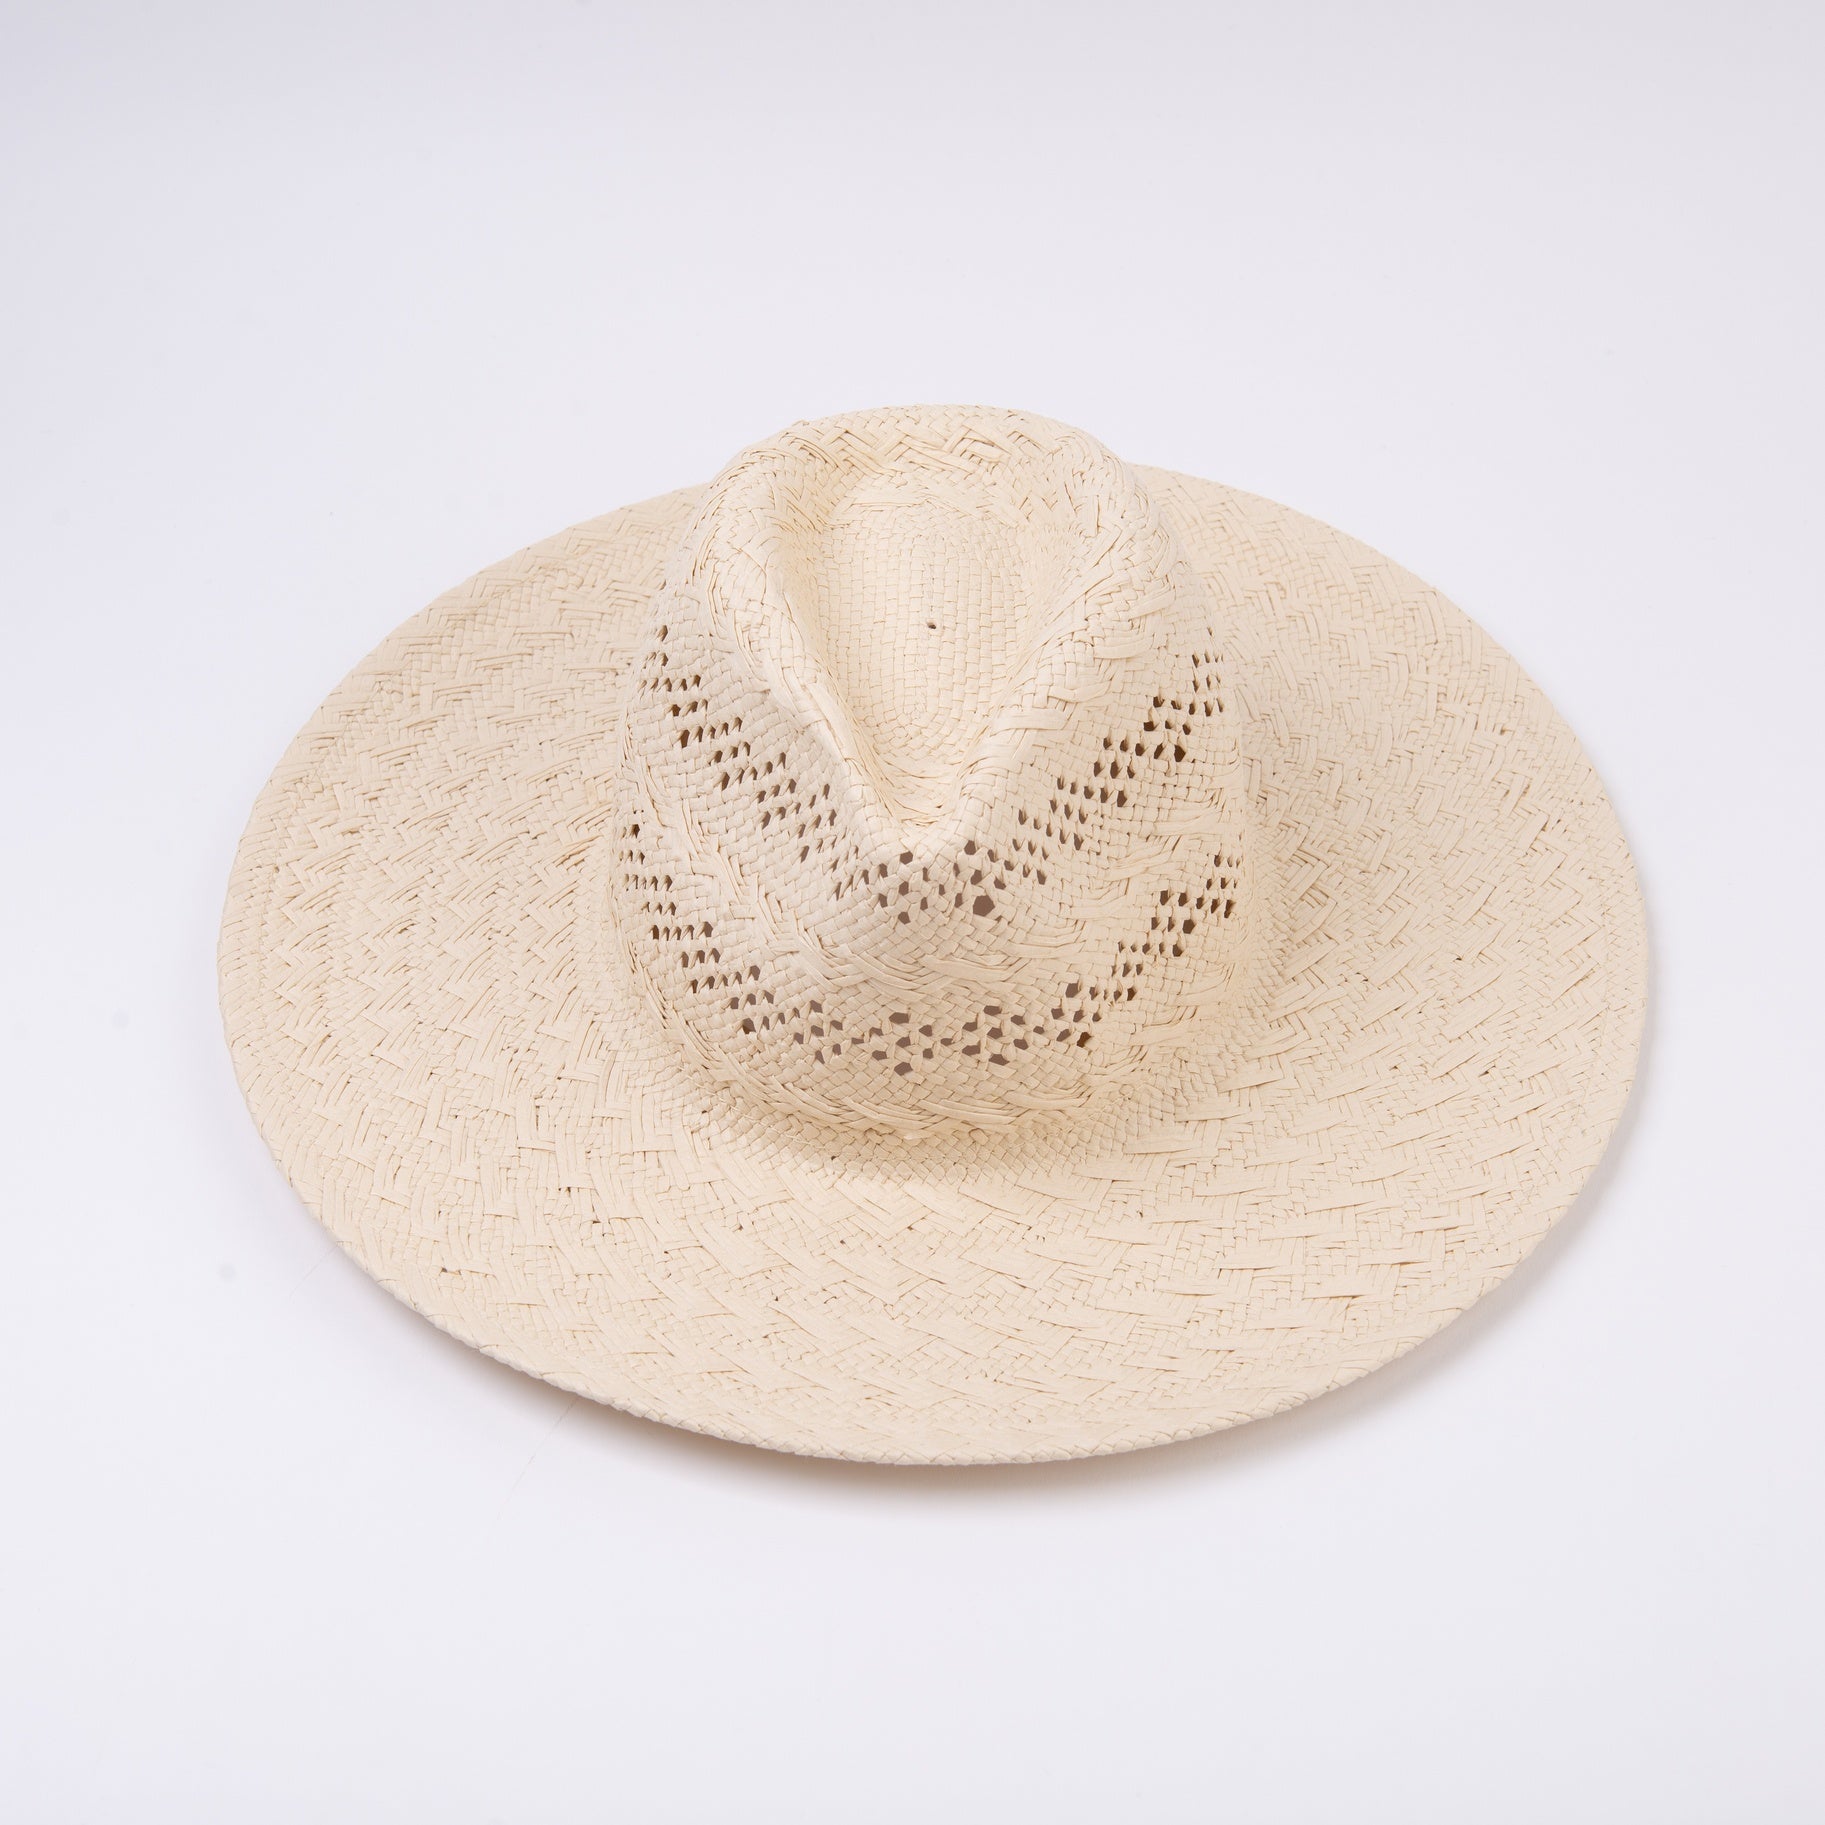 The Ventura Sun Hat